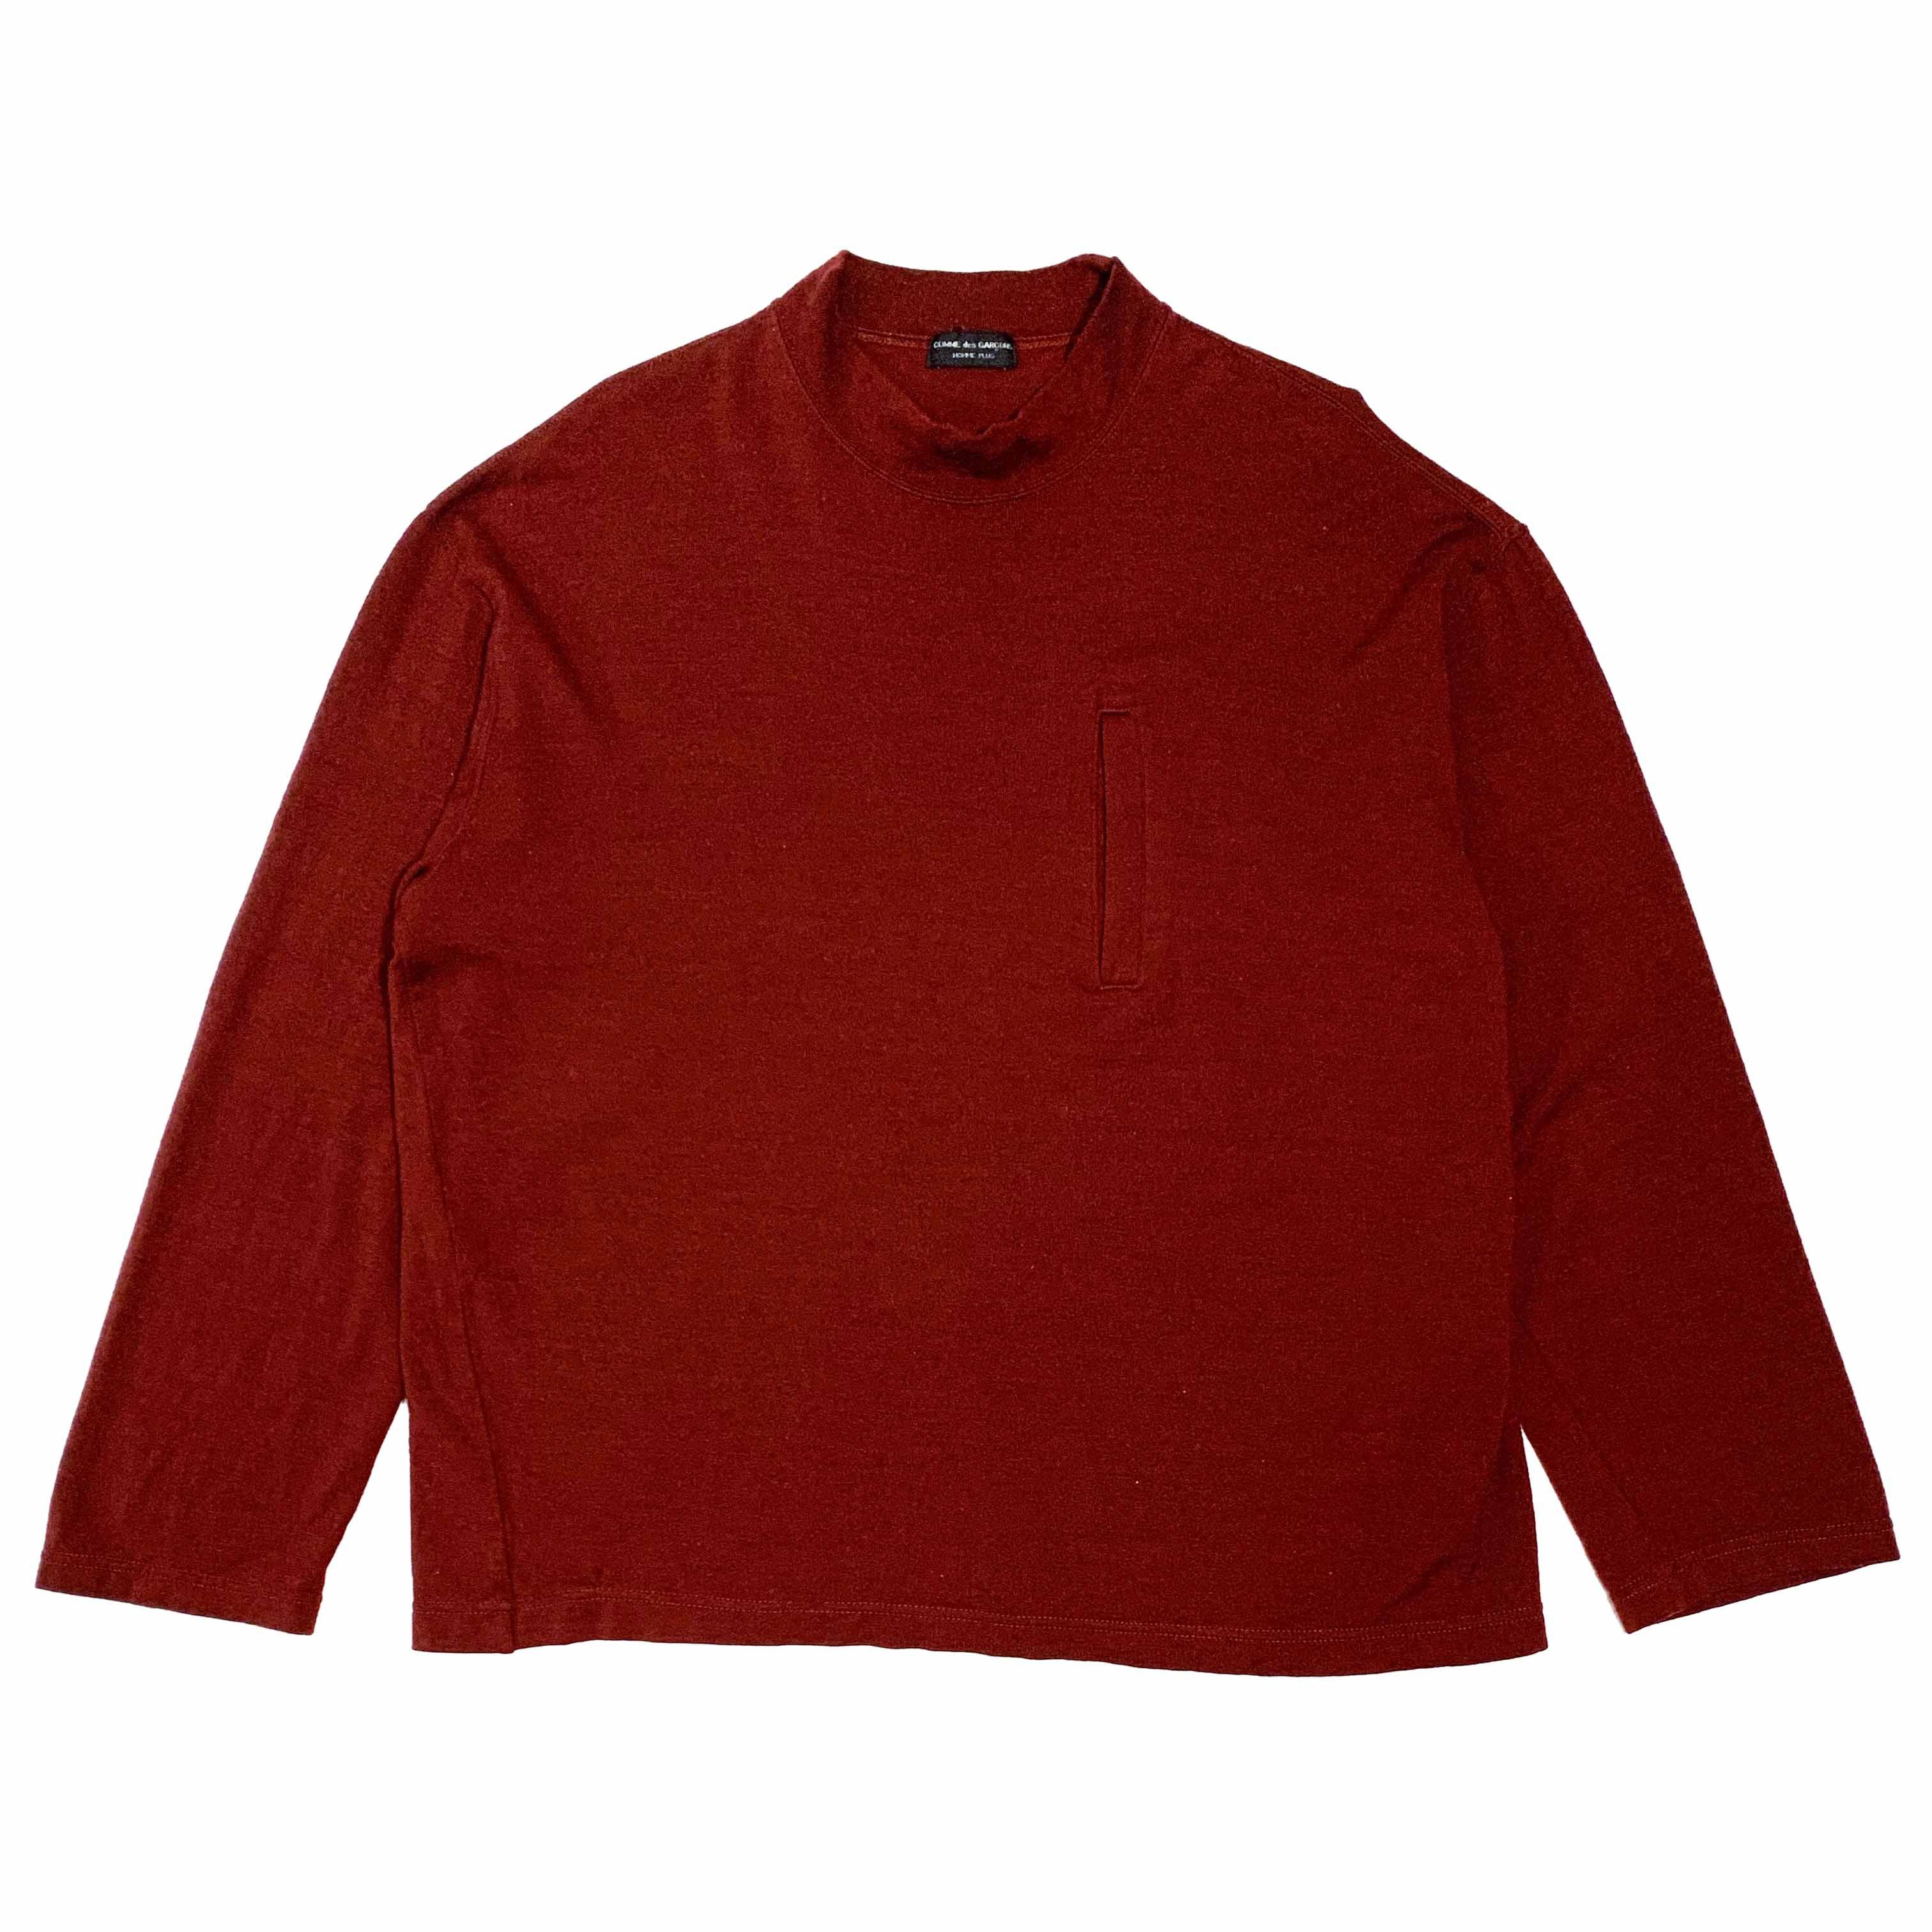 AW94 Wool Mock Neck Sweater - 1